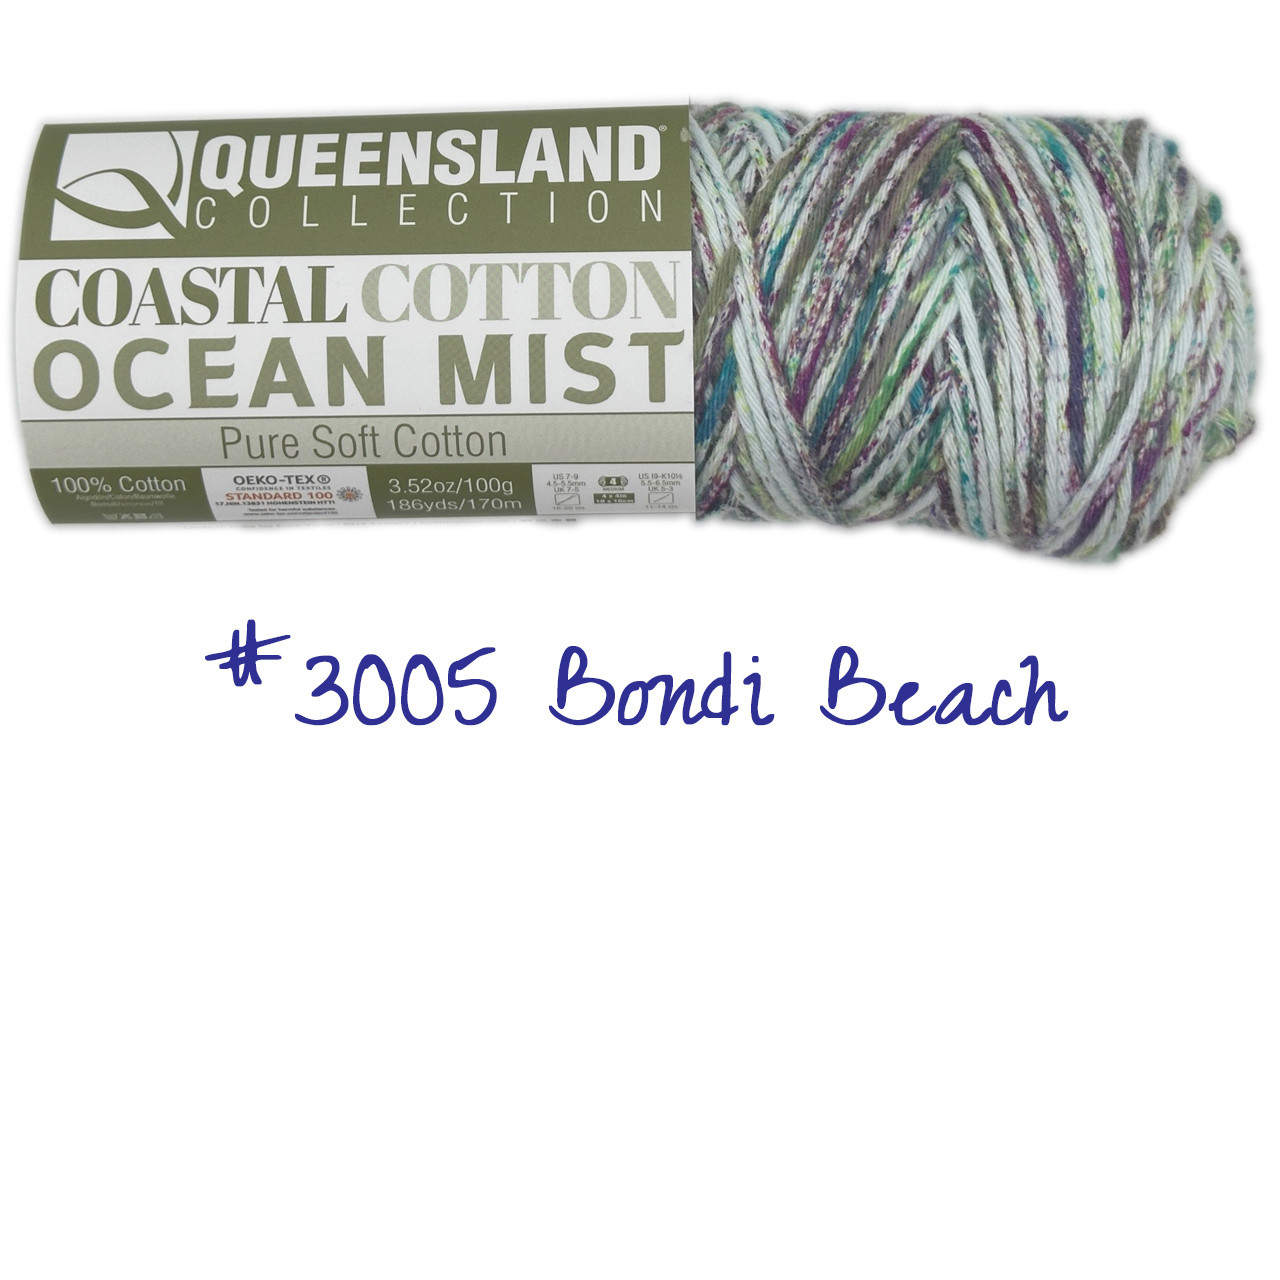 Queensland Collection Coastal Cotton